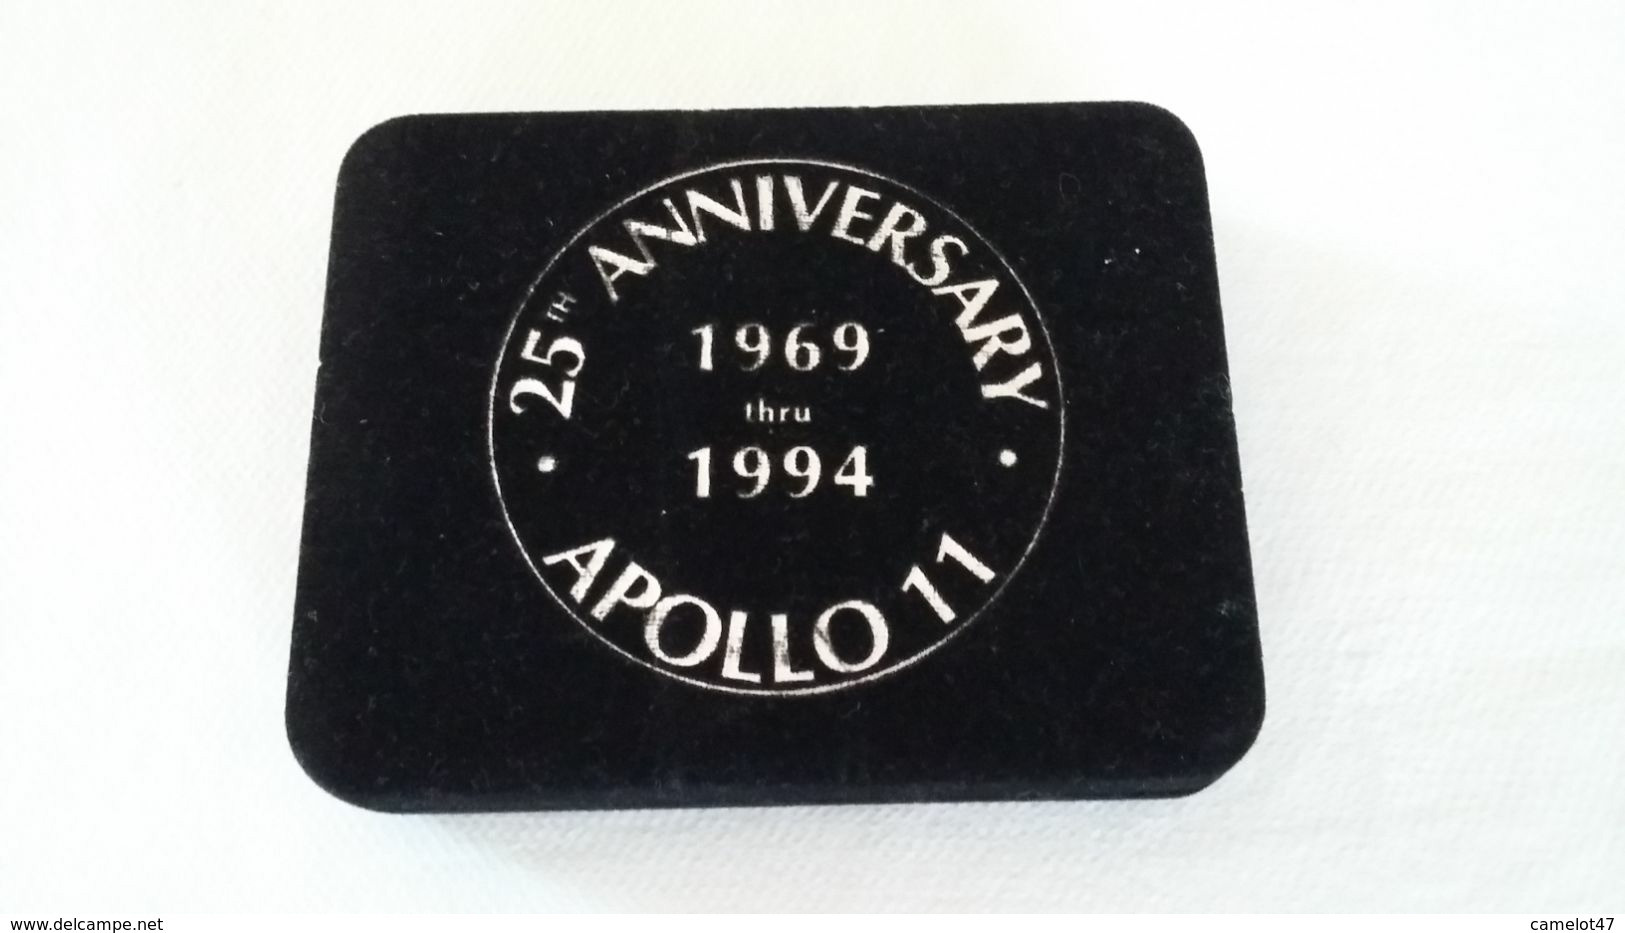 Sprint U.S.A. 4 $8 phone cards 25th Anniversary Apollo 11 limited editon, 1969 ex, SCARCE, HARD TO GET